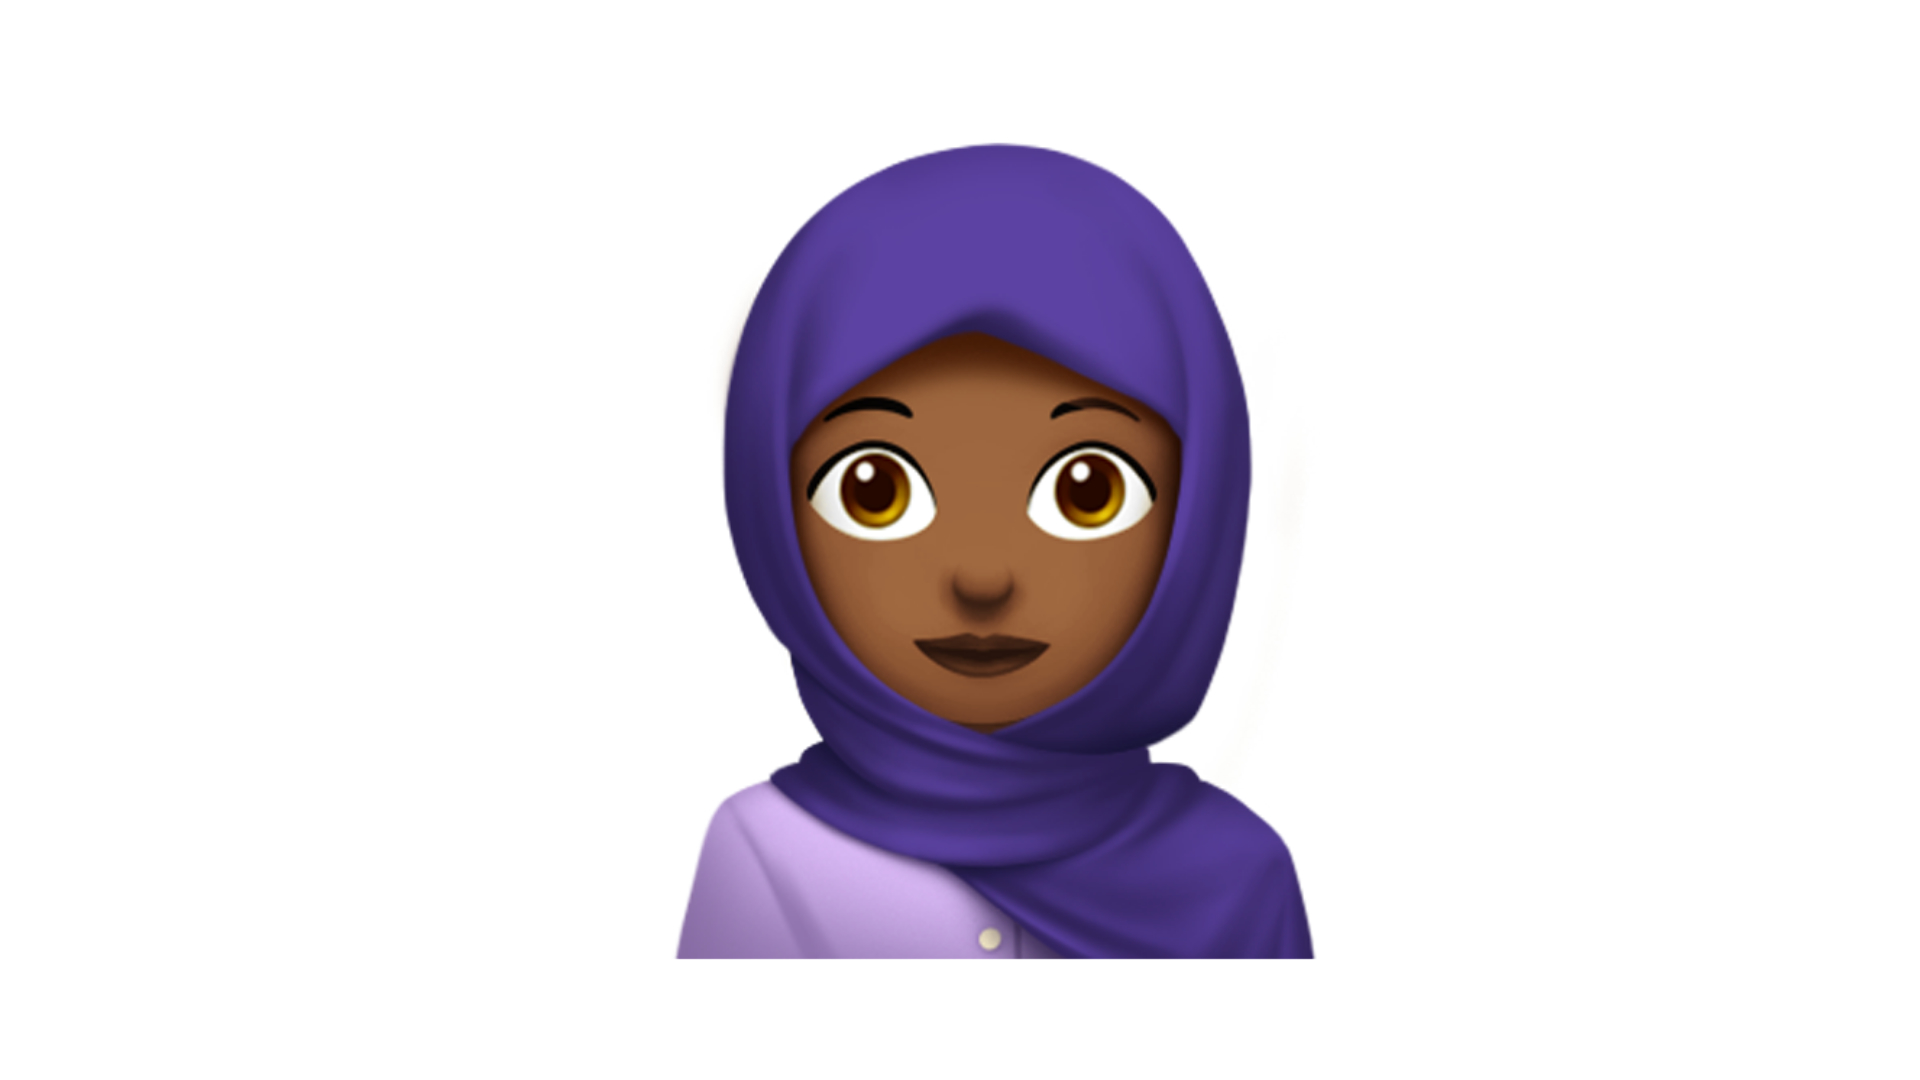 The new emoji, Woman With Headscarf